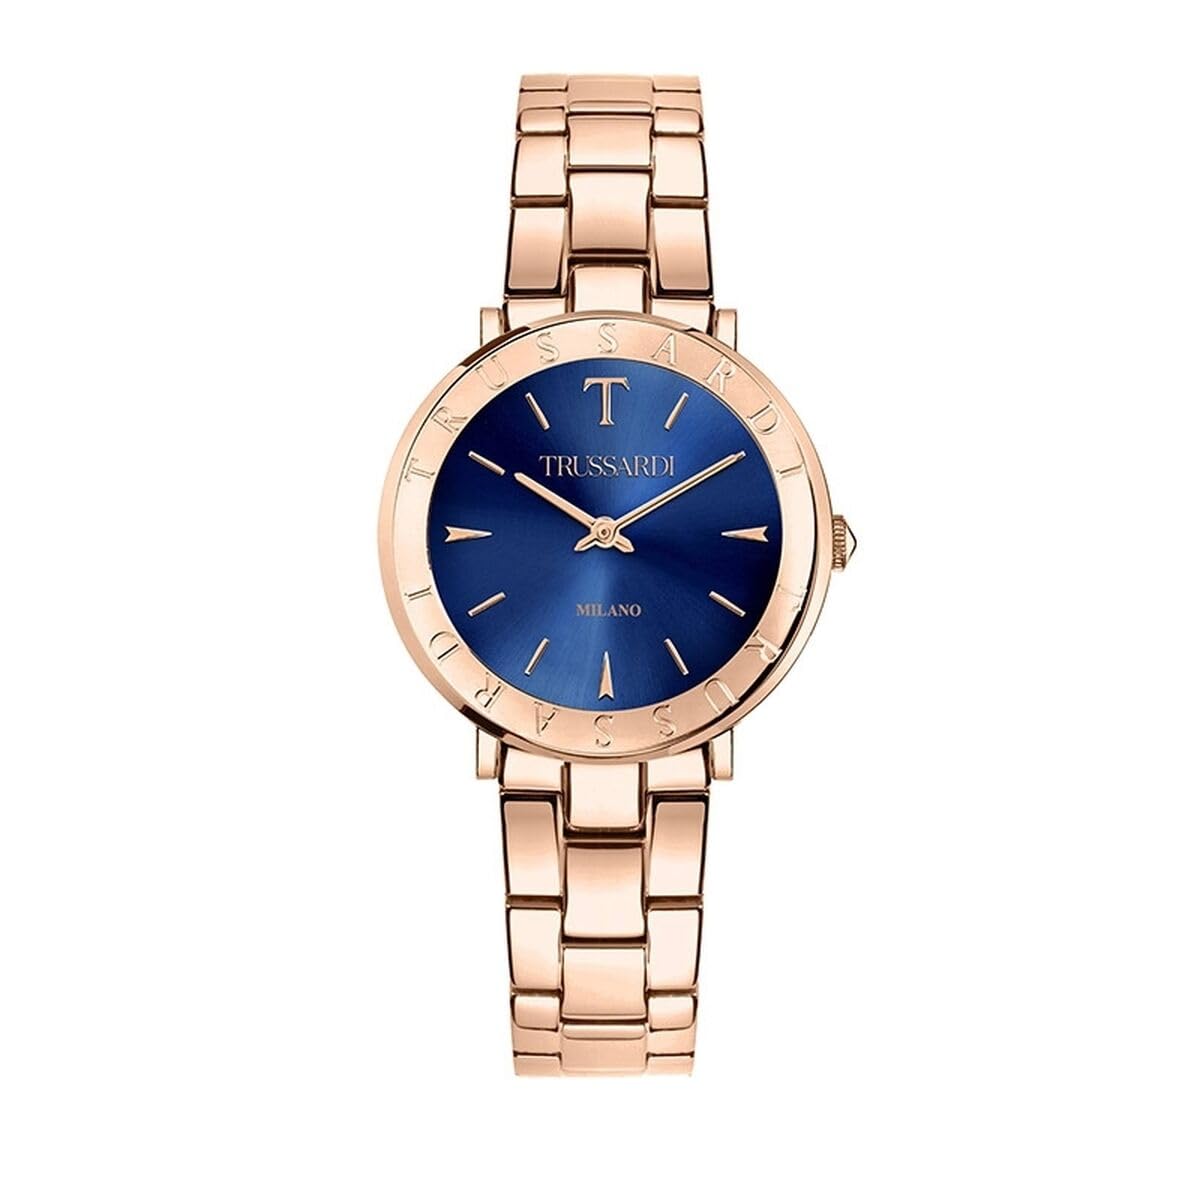 Trussardi Women's Analog-Digital Automatic Uhr mit Armband S7272646